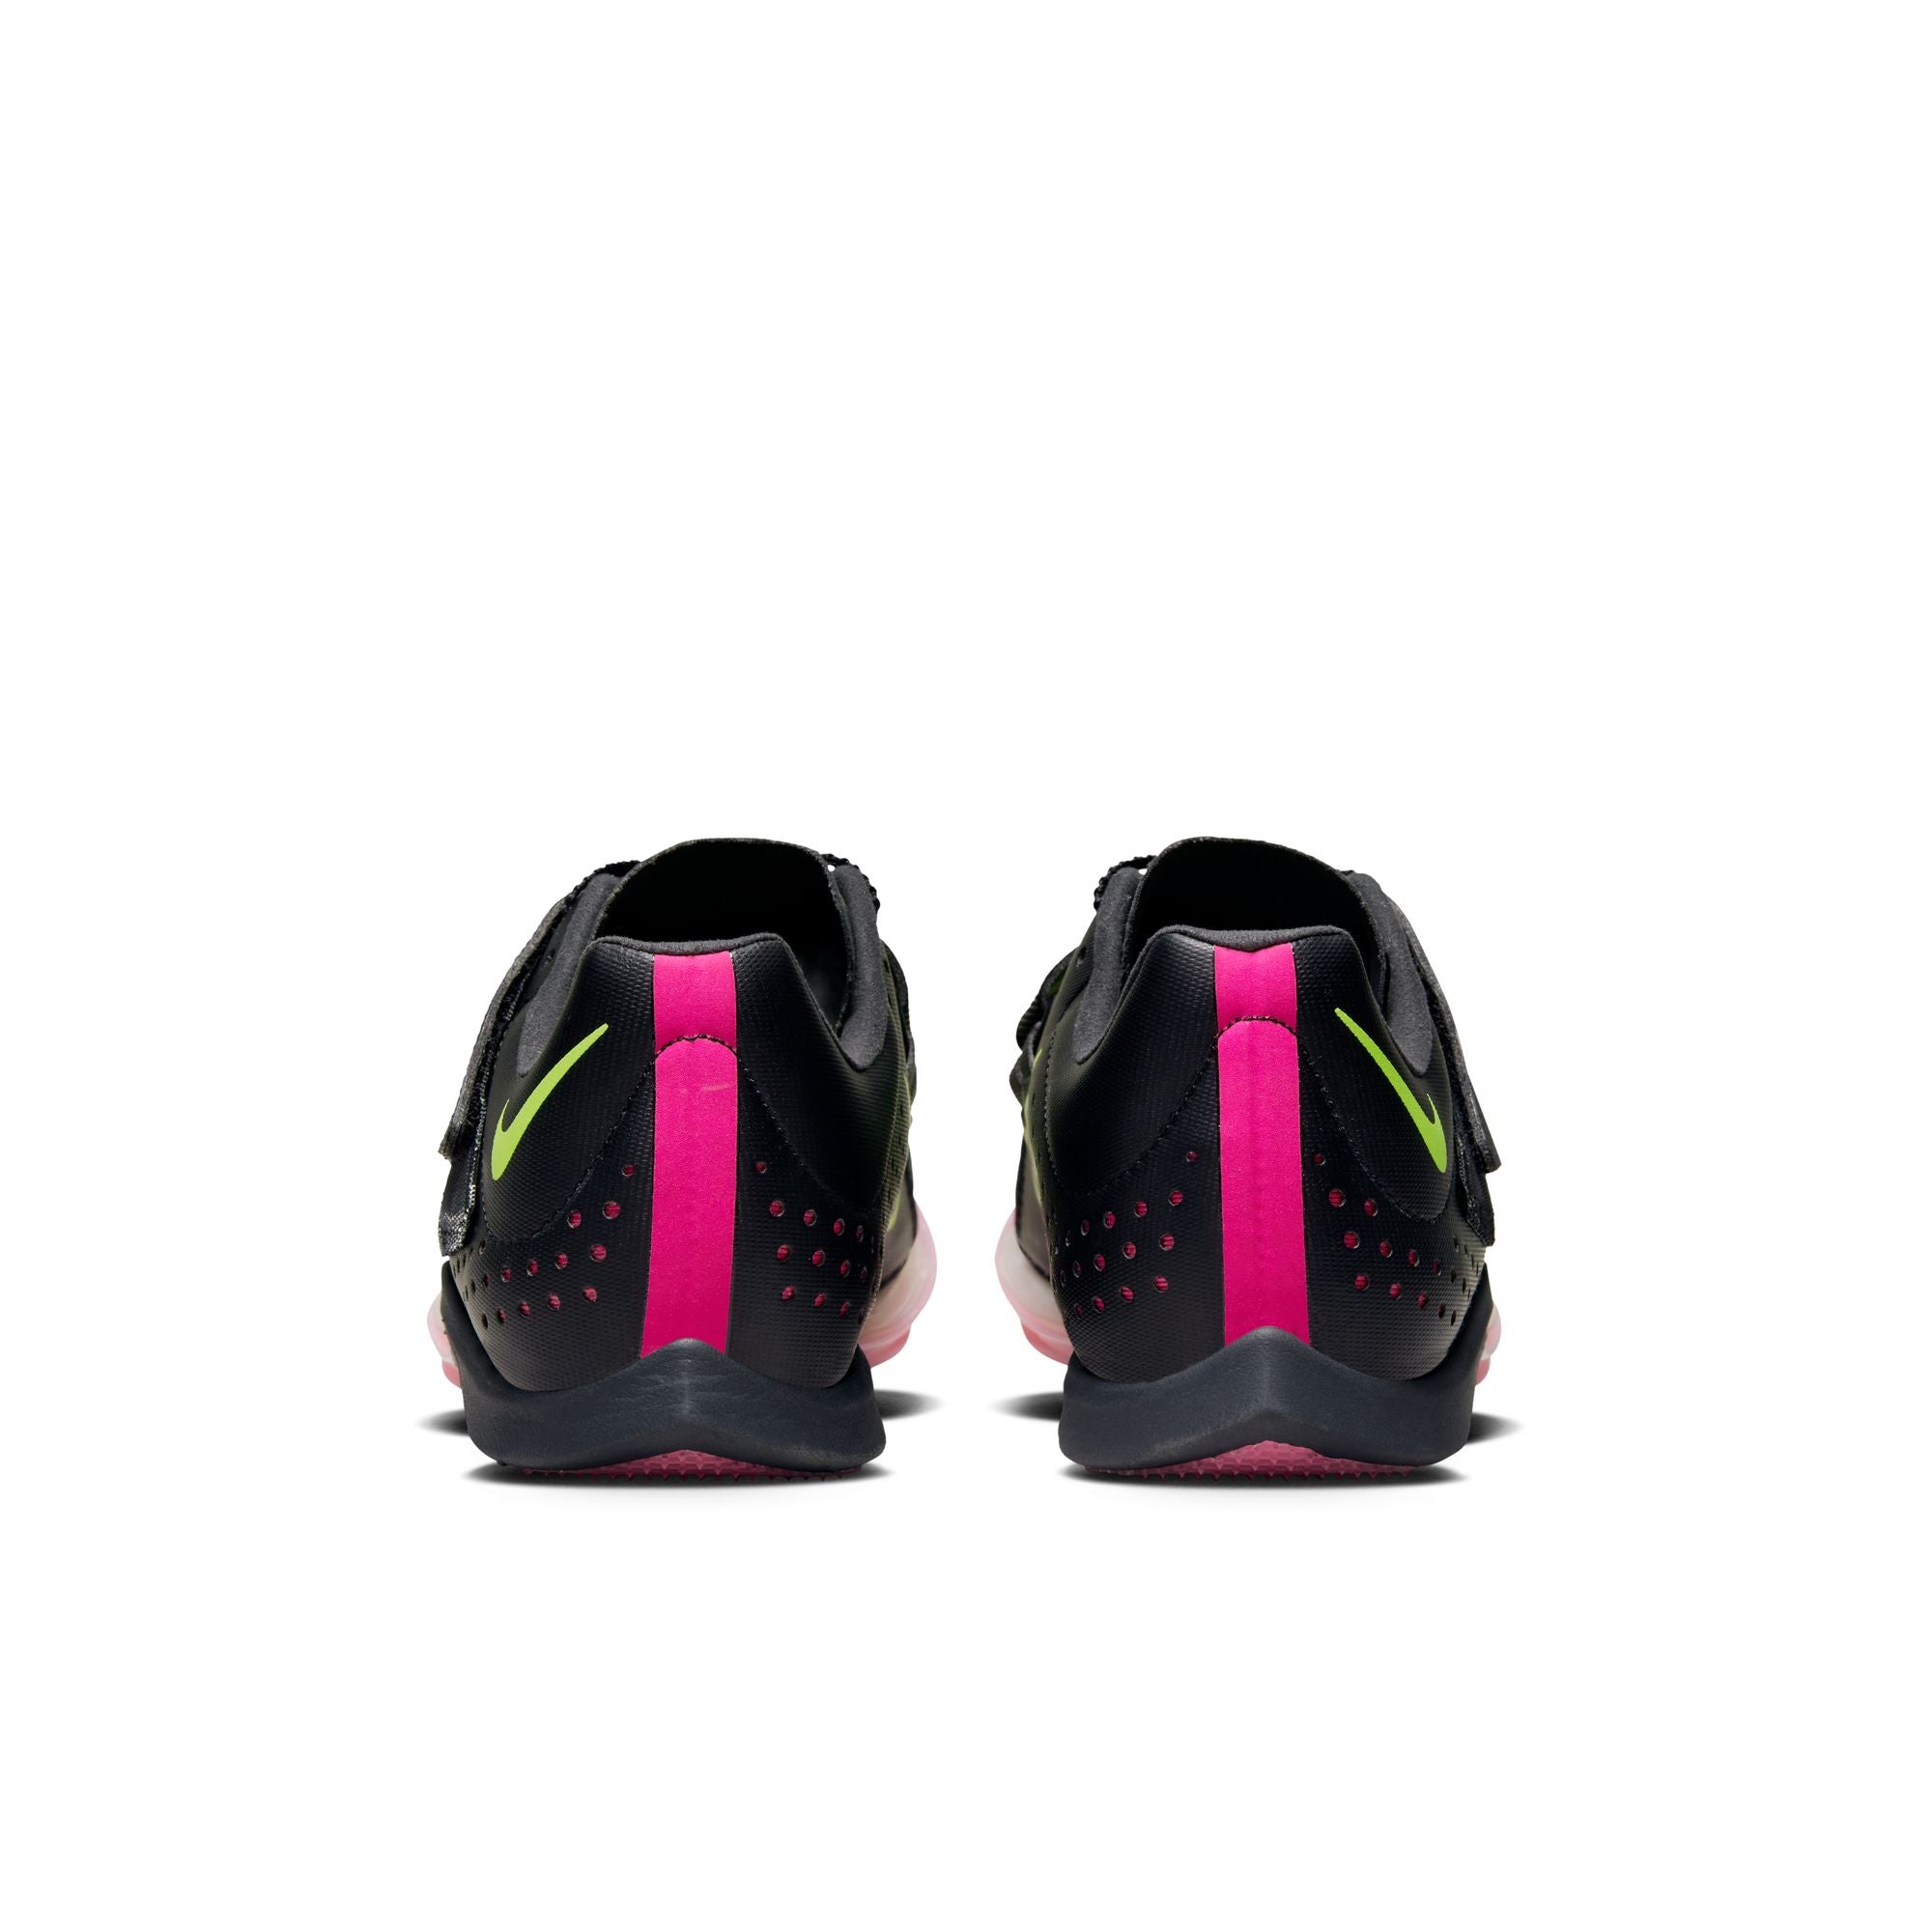 air zoom long jump elite 001 anthracite fierce pink black 